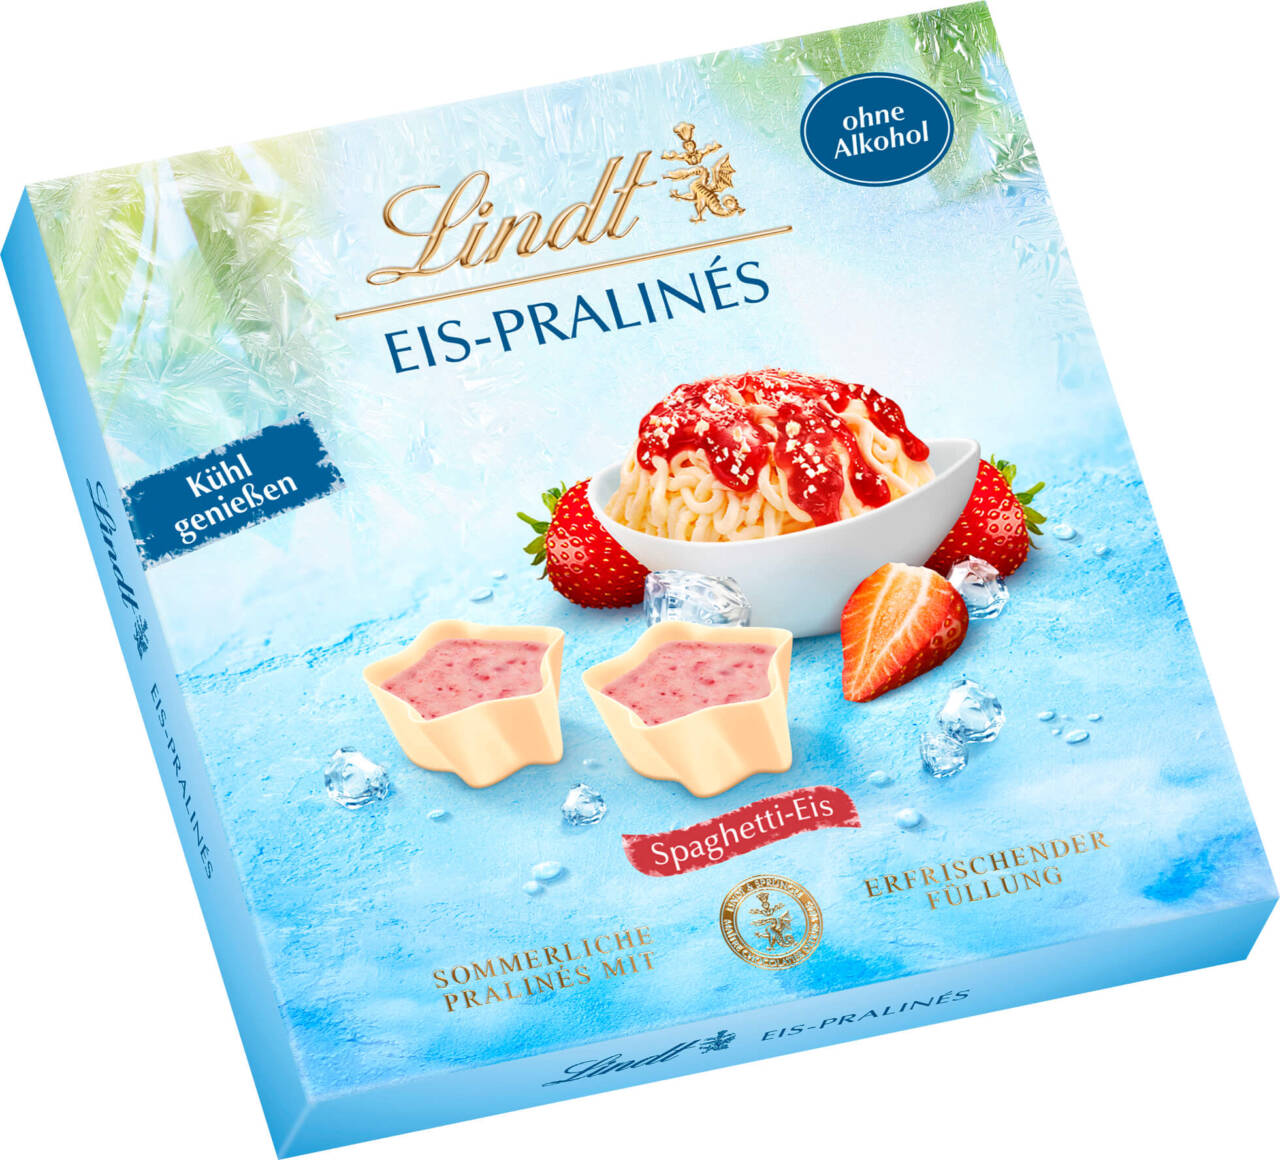 Lindt Spaghetti-Eis Pralines 80g